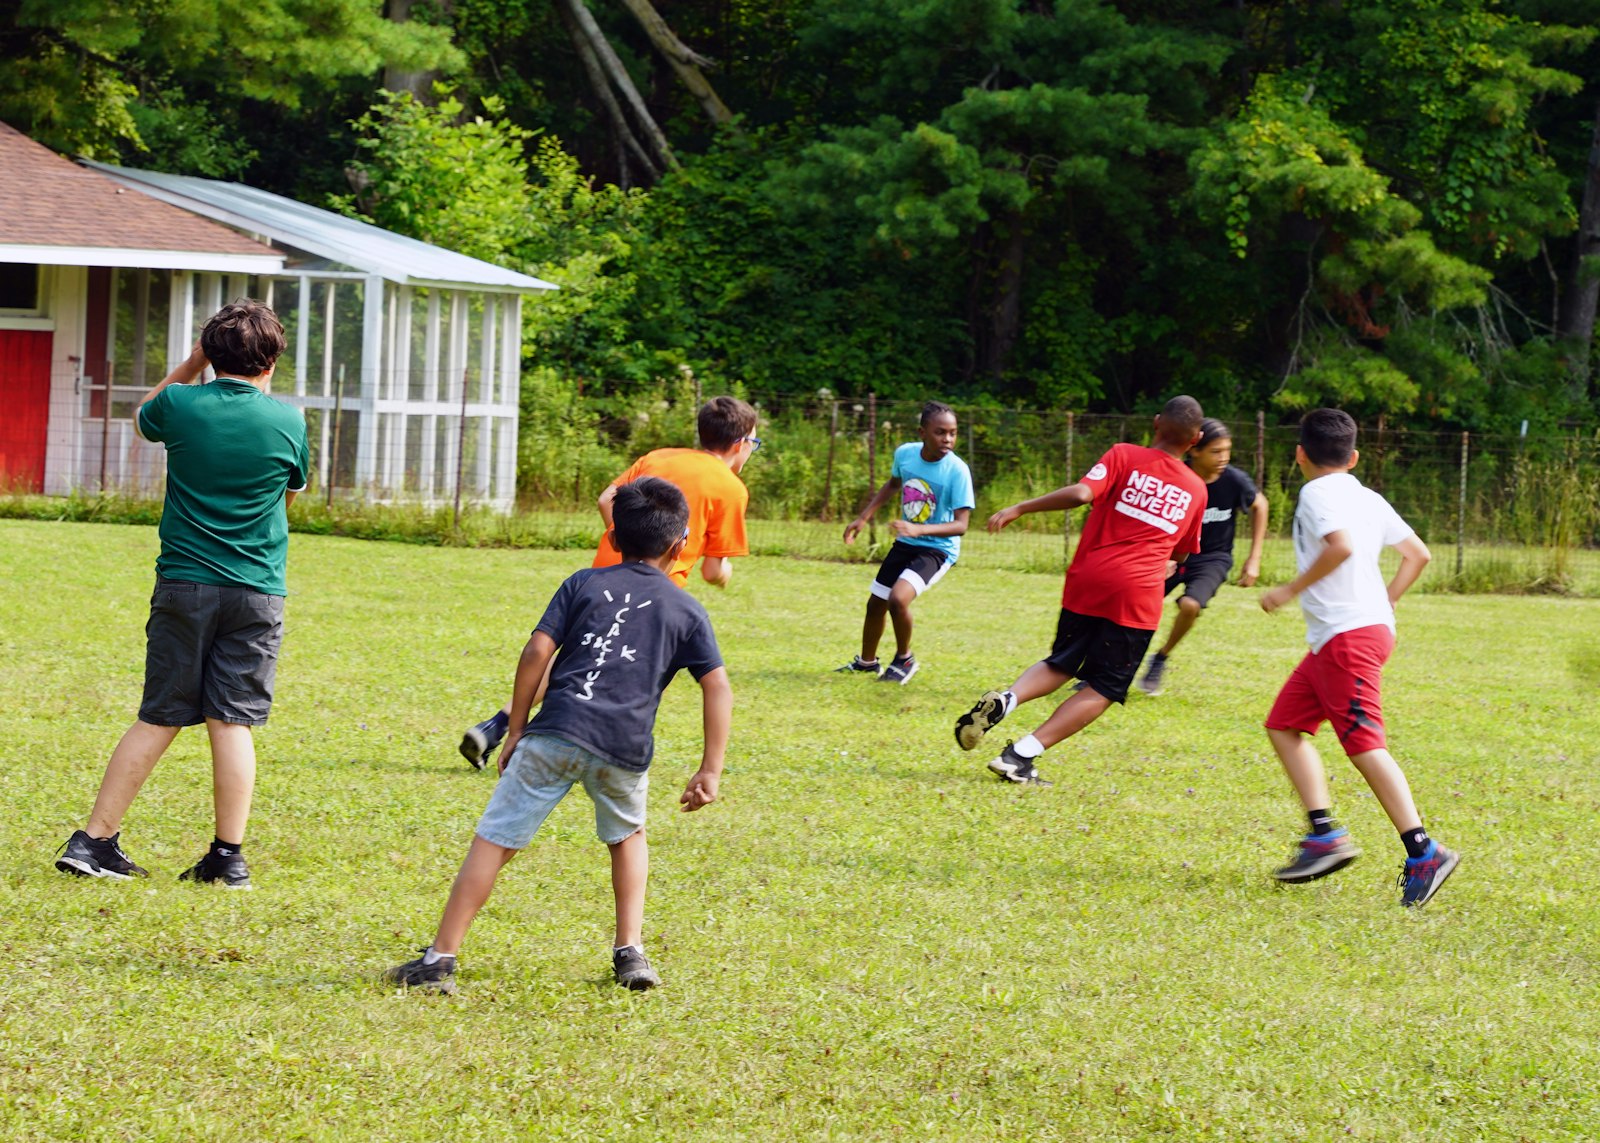 Camp Ozanam celebrates 100-year legacy of faith, safety, fun for kids ...